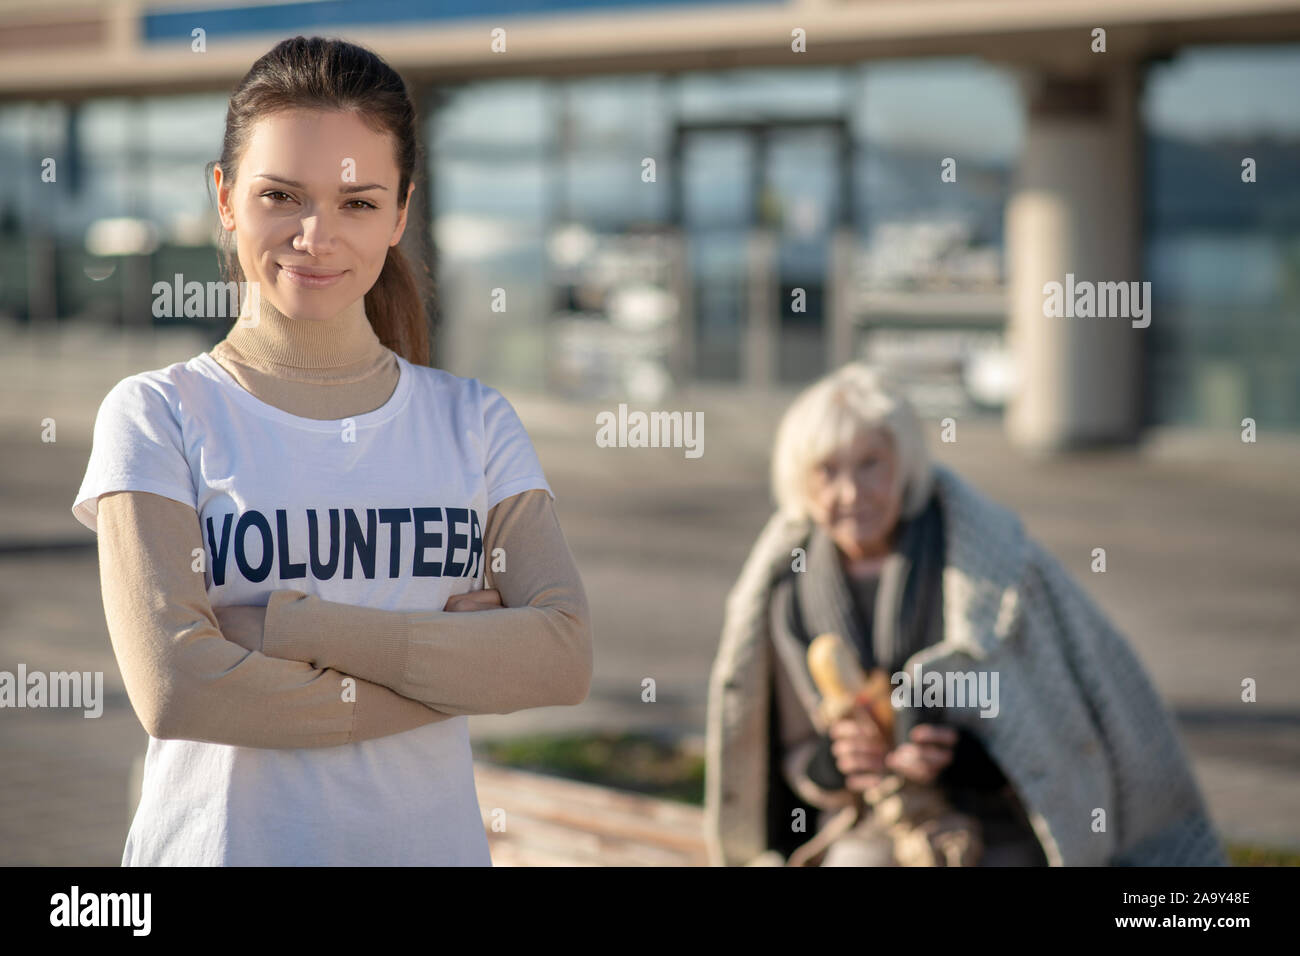 Dark-eyed volunteer wearing white shirt feeling motivated Stock Photo